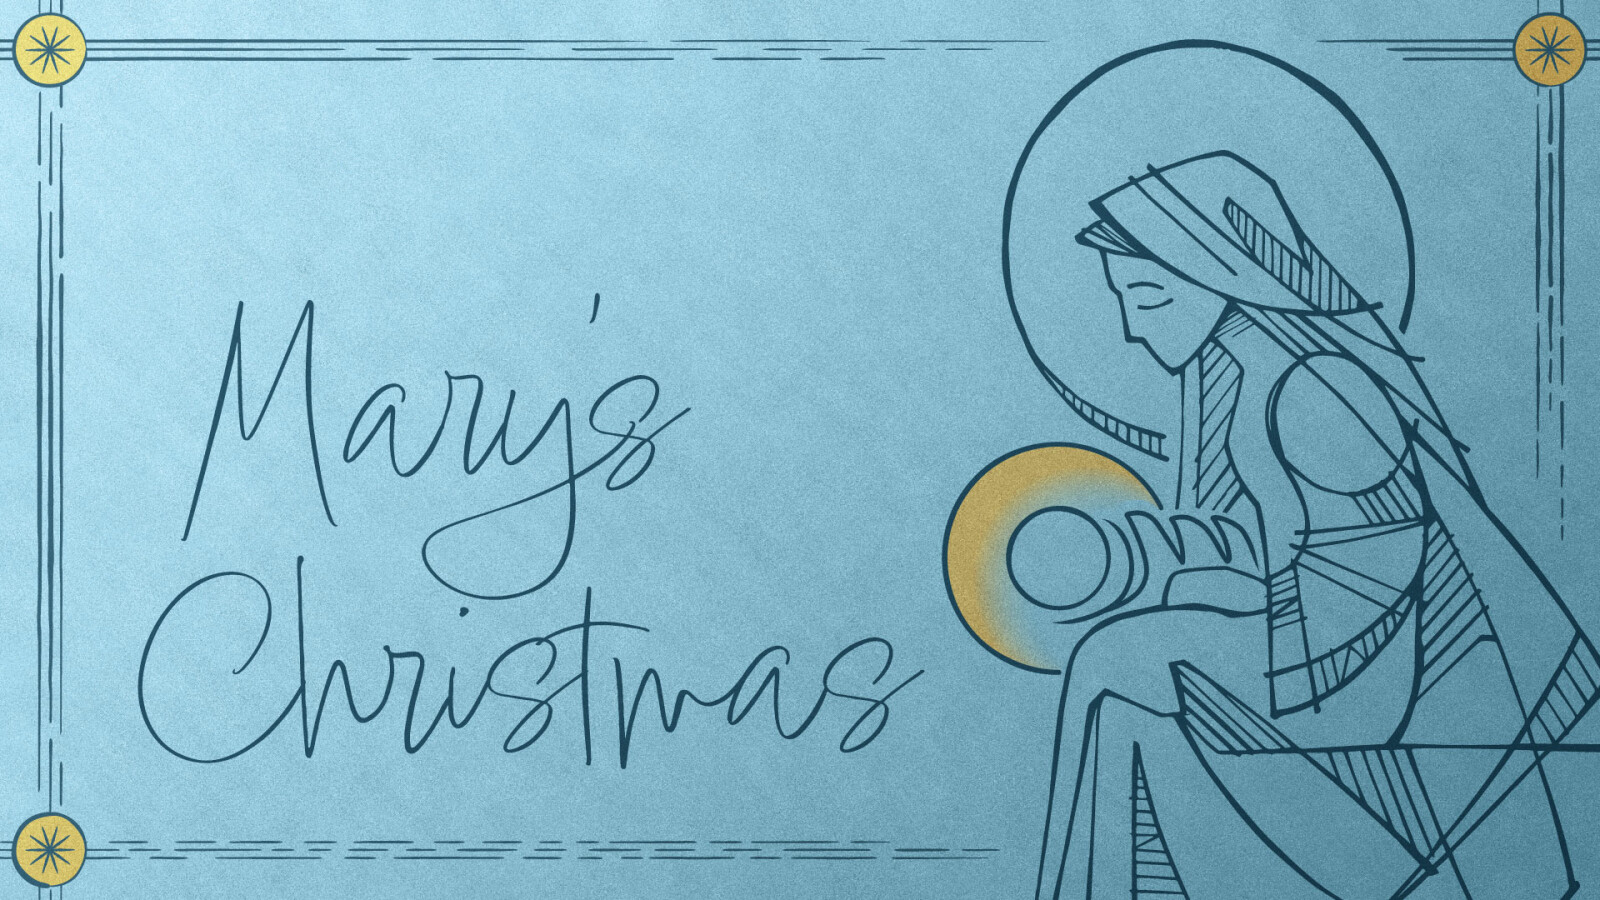 Mary's Christmas